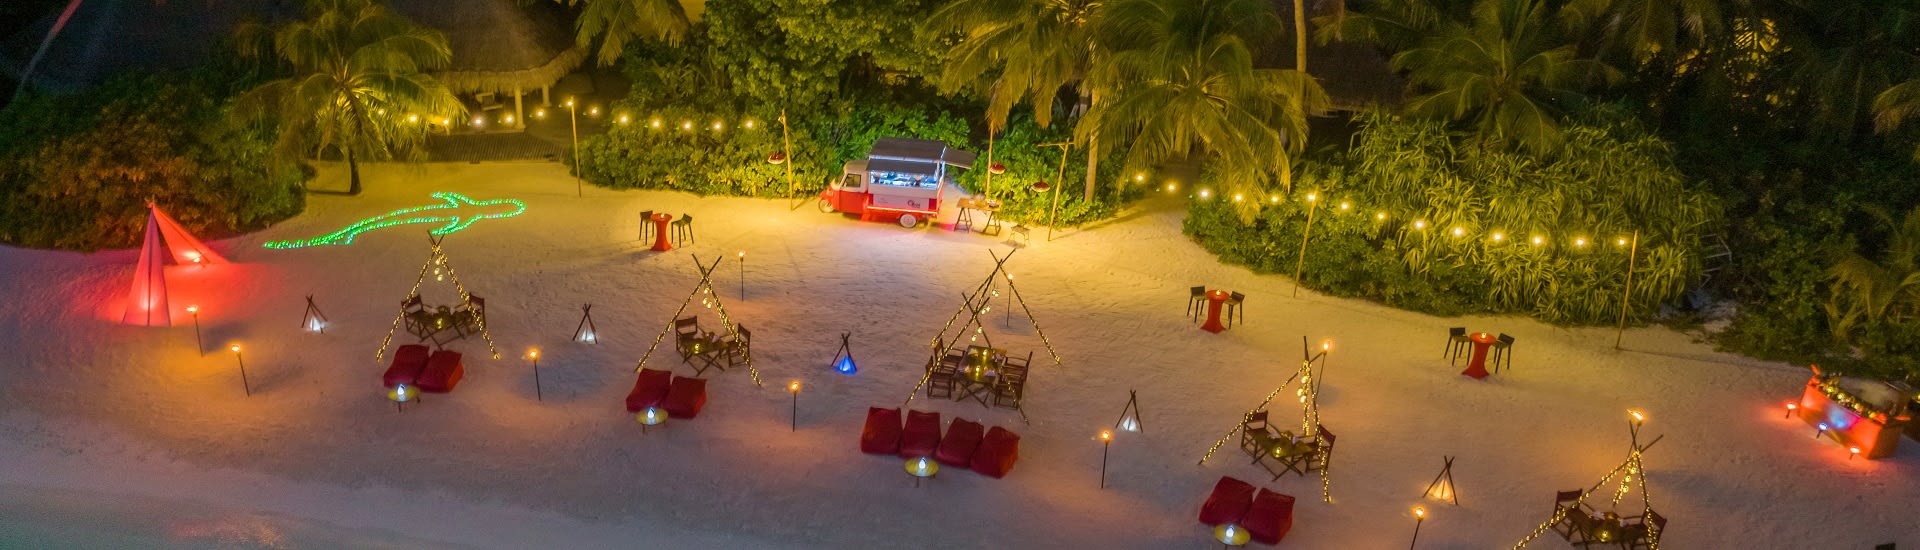 Niyama Private Islands Maldives - Beach Event Setup